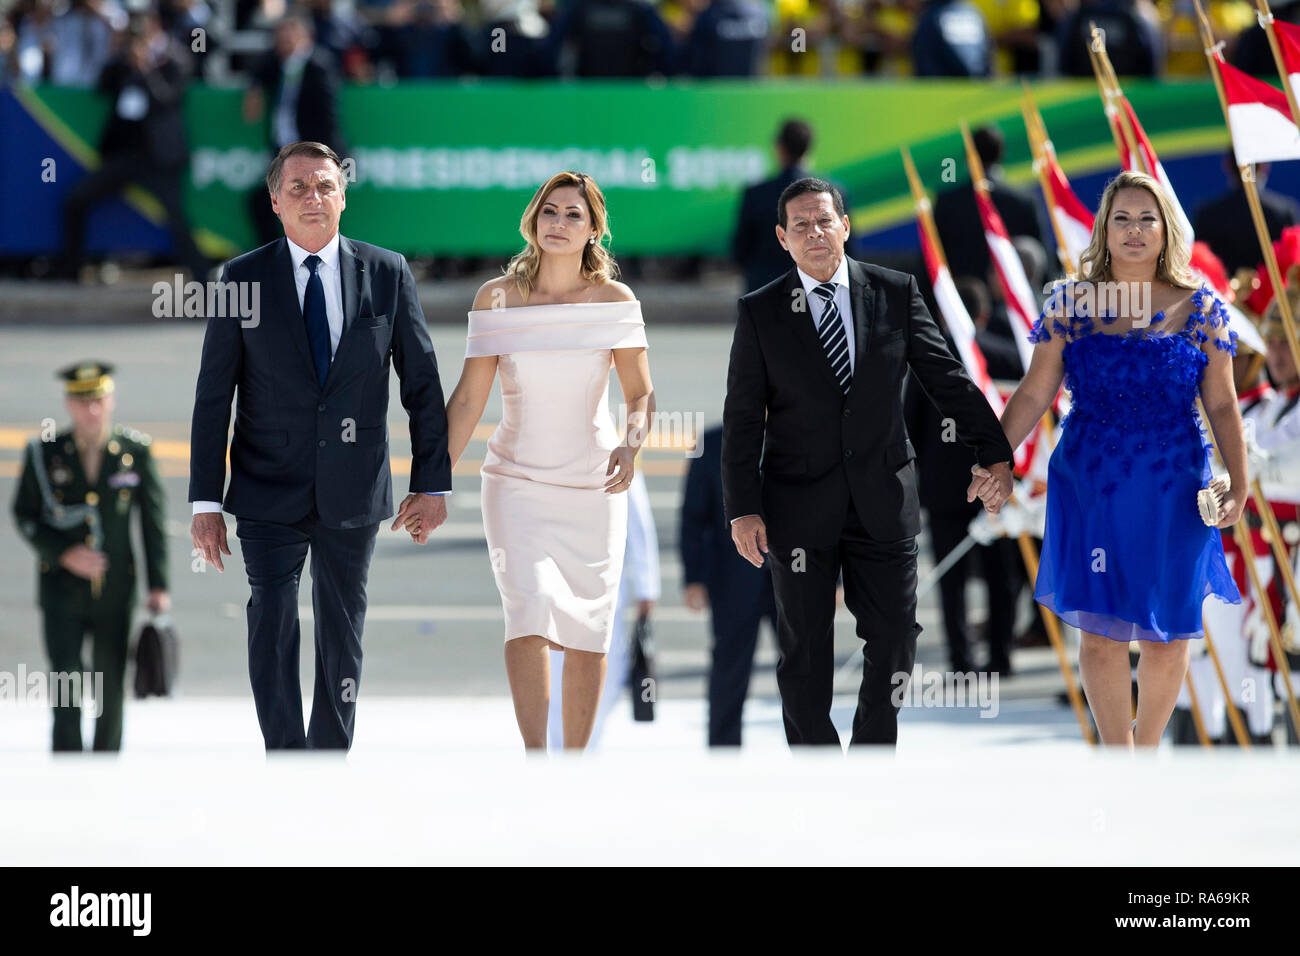 Brasilia, Brasil. 1 ene, 2019. El nuevo presidente de Brasil Jair  Bolsonaro, su esposa Michelle Bolsonaro, nuevo vicepresidente de Brasil  Hamilton Mourao y su esposa Paula Mourao (de L a R, delantero)